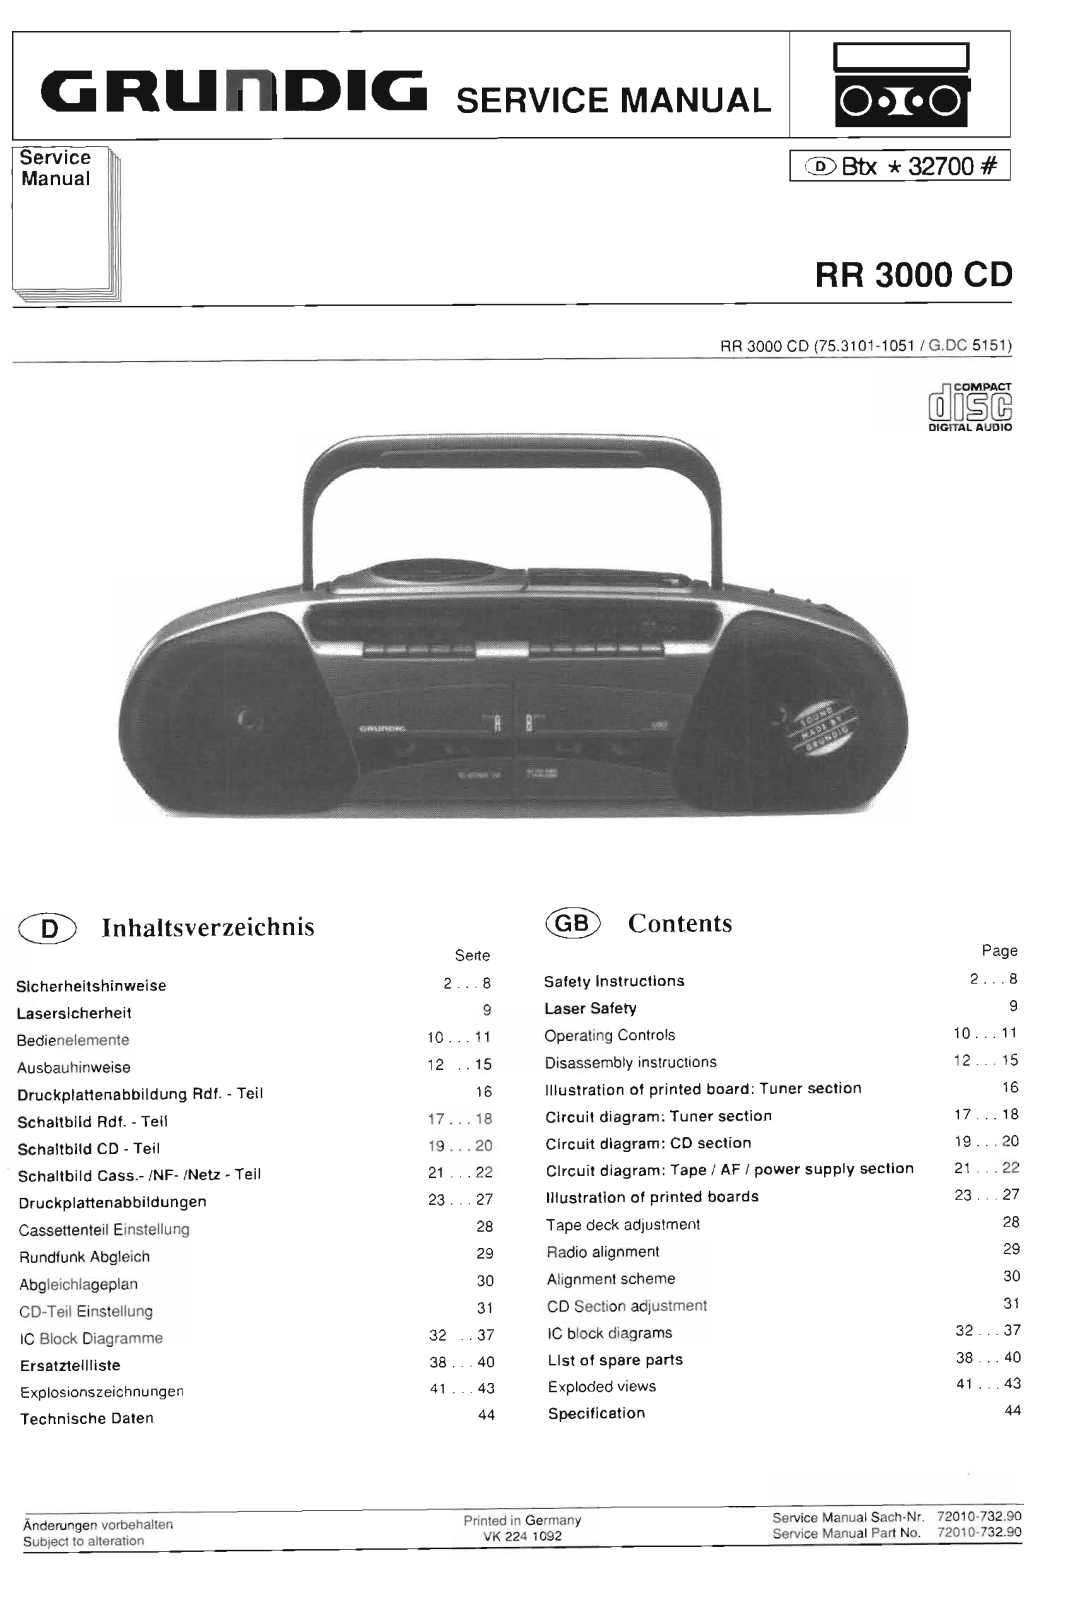 Grundig RR-3000-CD Service Manual